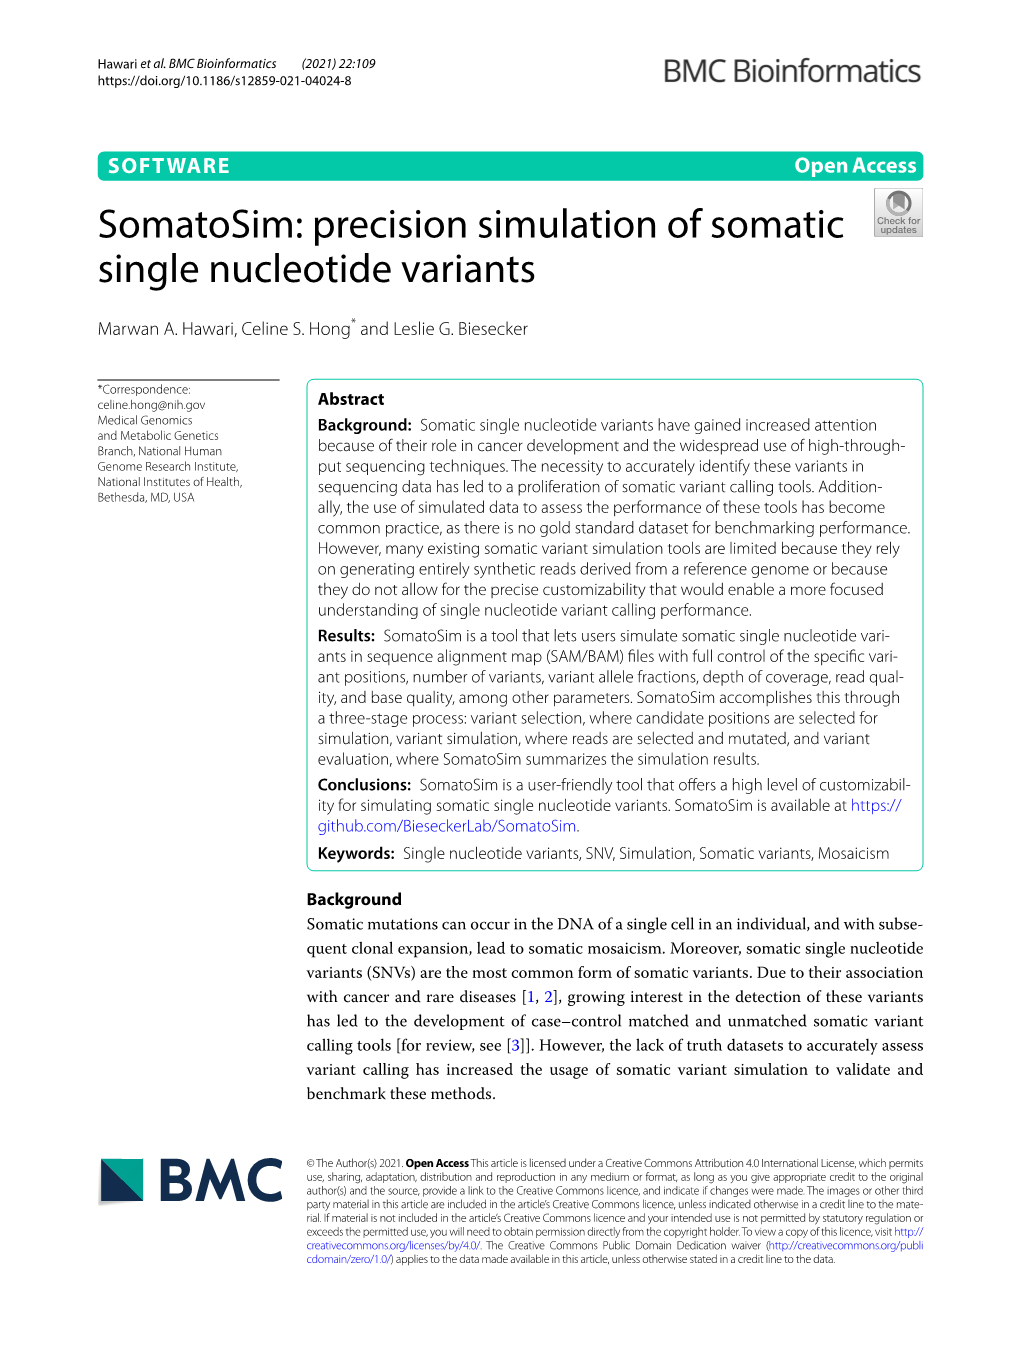 Precision Simulation of Somatic Single Nucleotide Variants